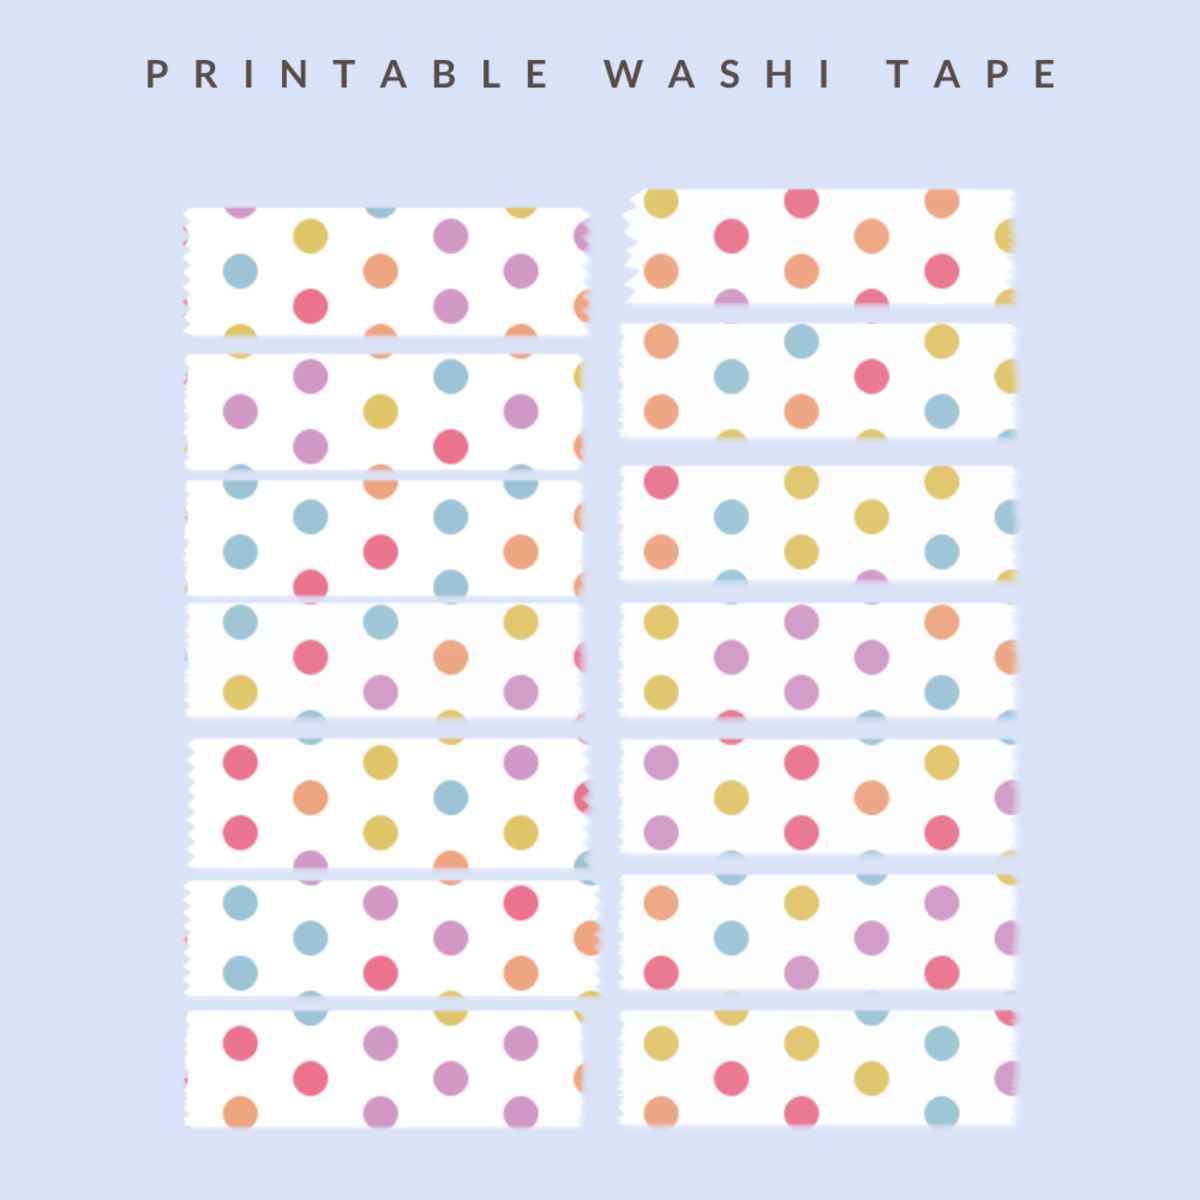 Paper Washi Tape Dragon Crane Stickers Printed Patterns Sticky Adhesive Tape BT3 